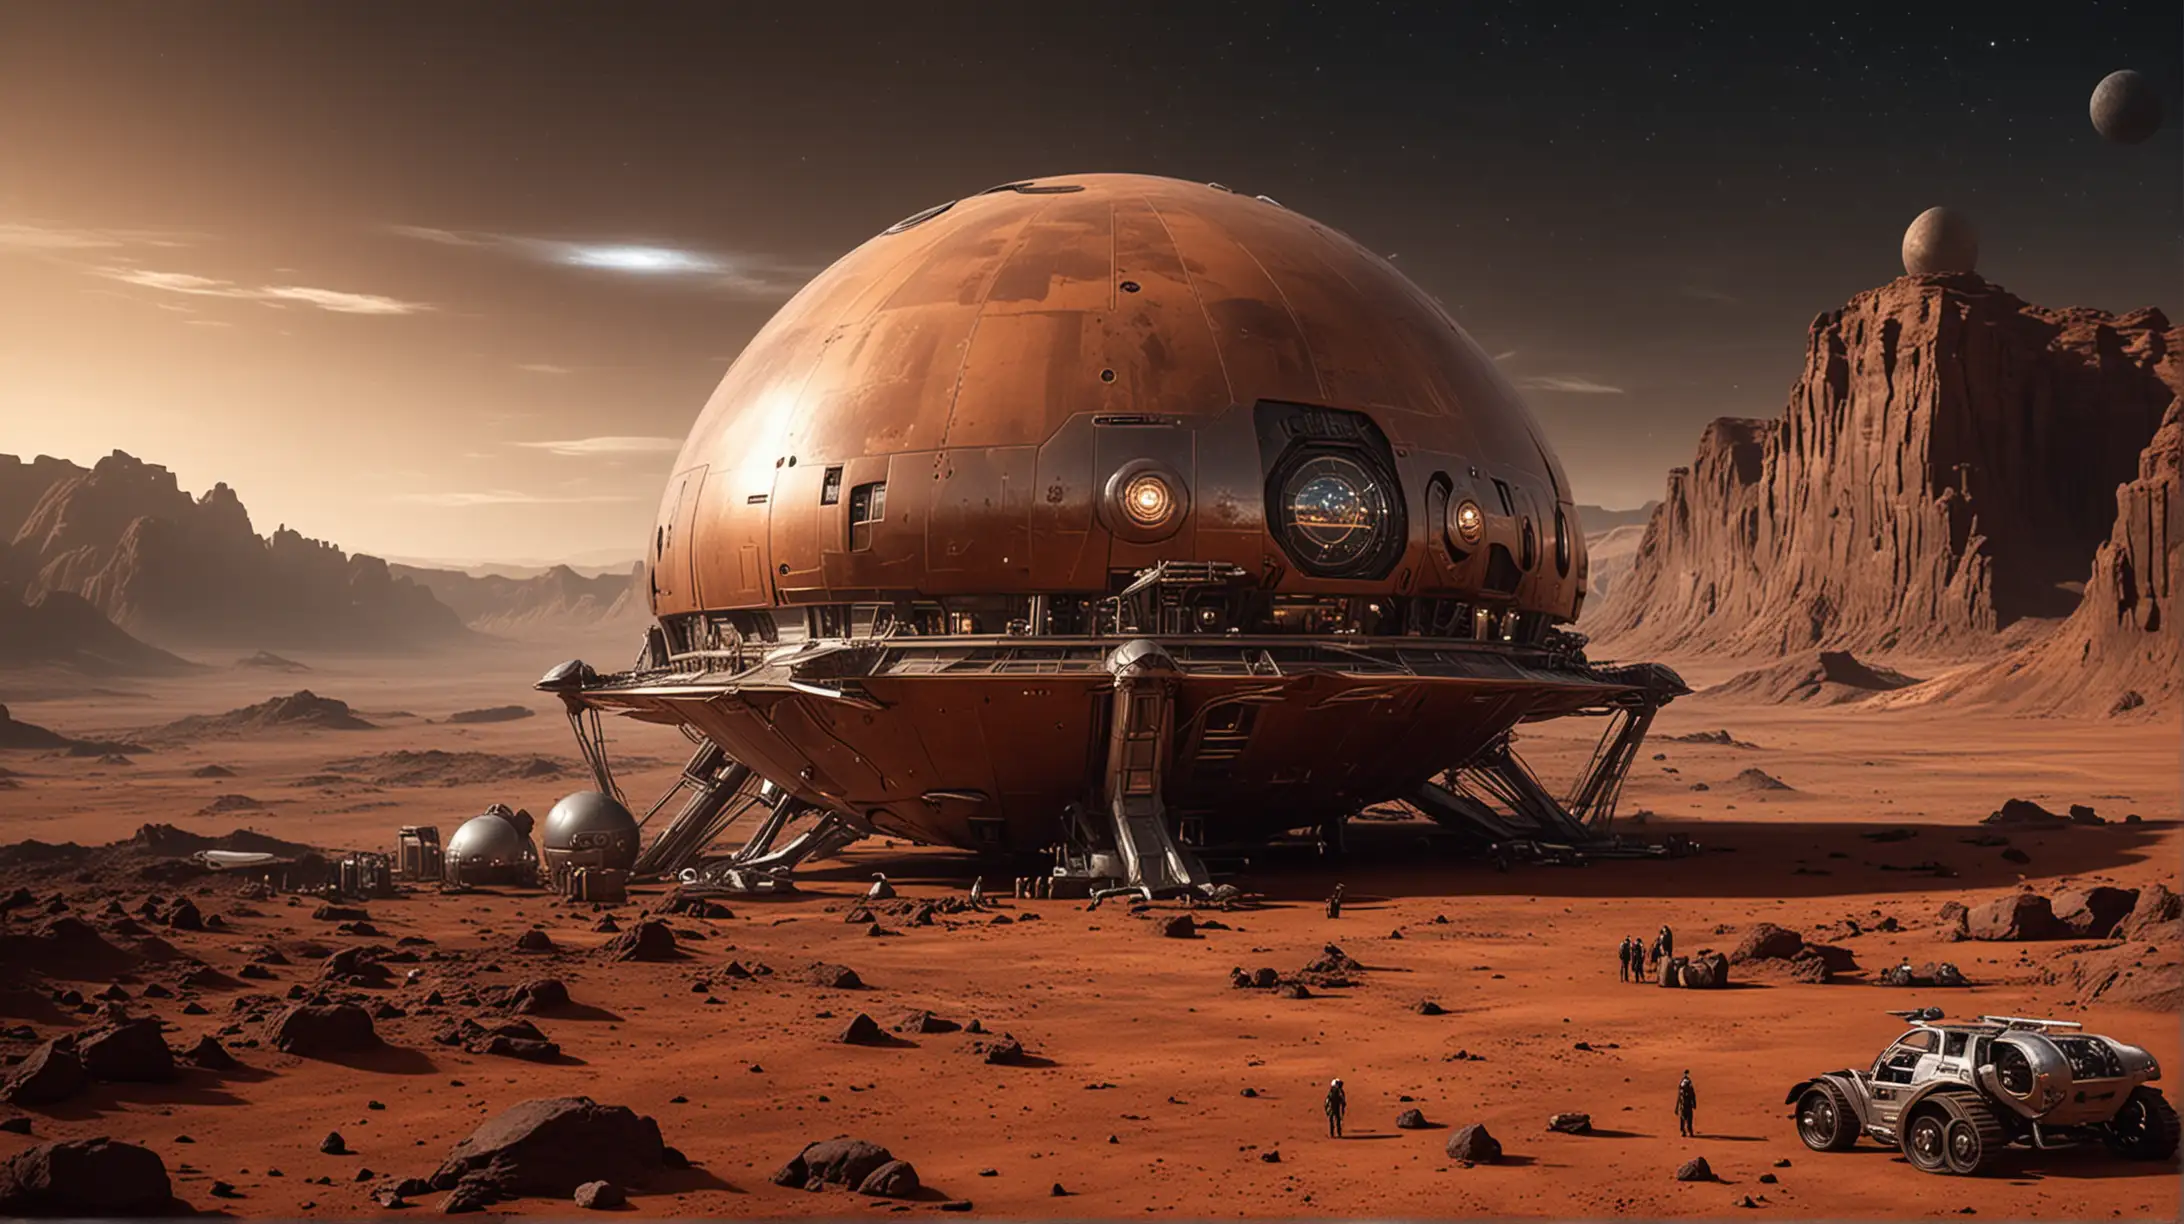 an alien interstellar spherical ship  has landed near human steampunk colony on Mars, completely dark